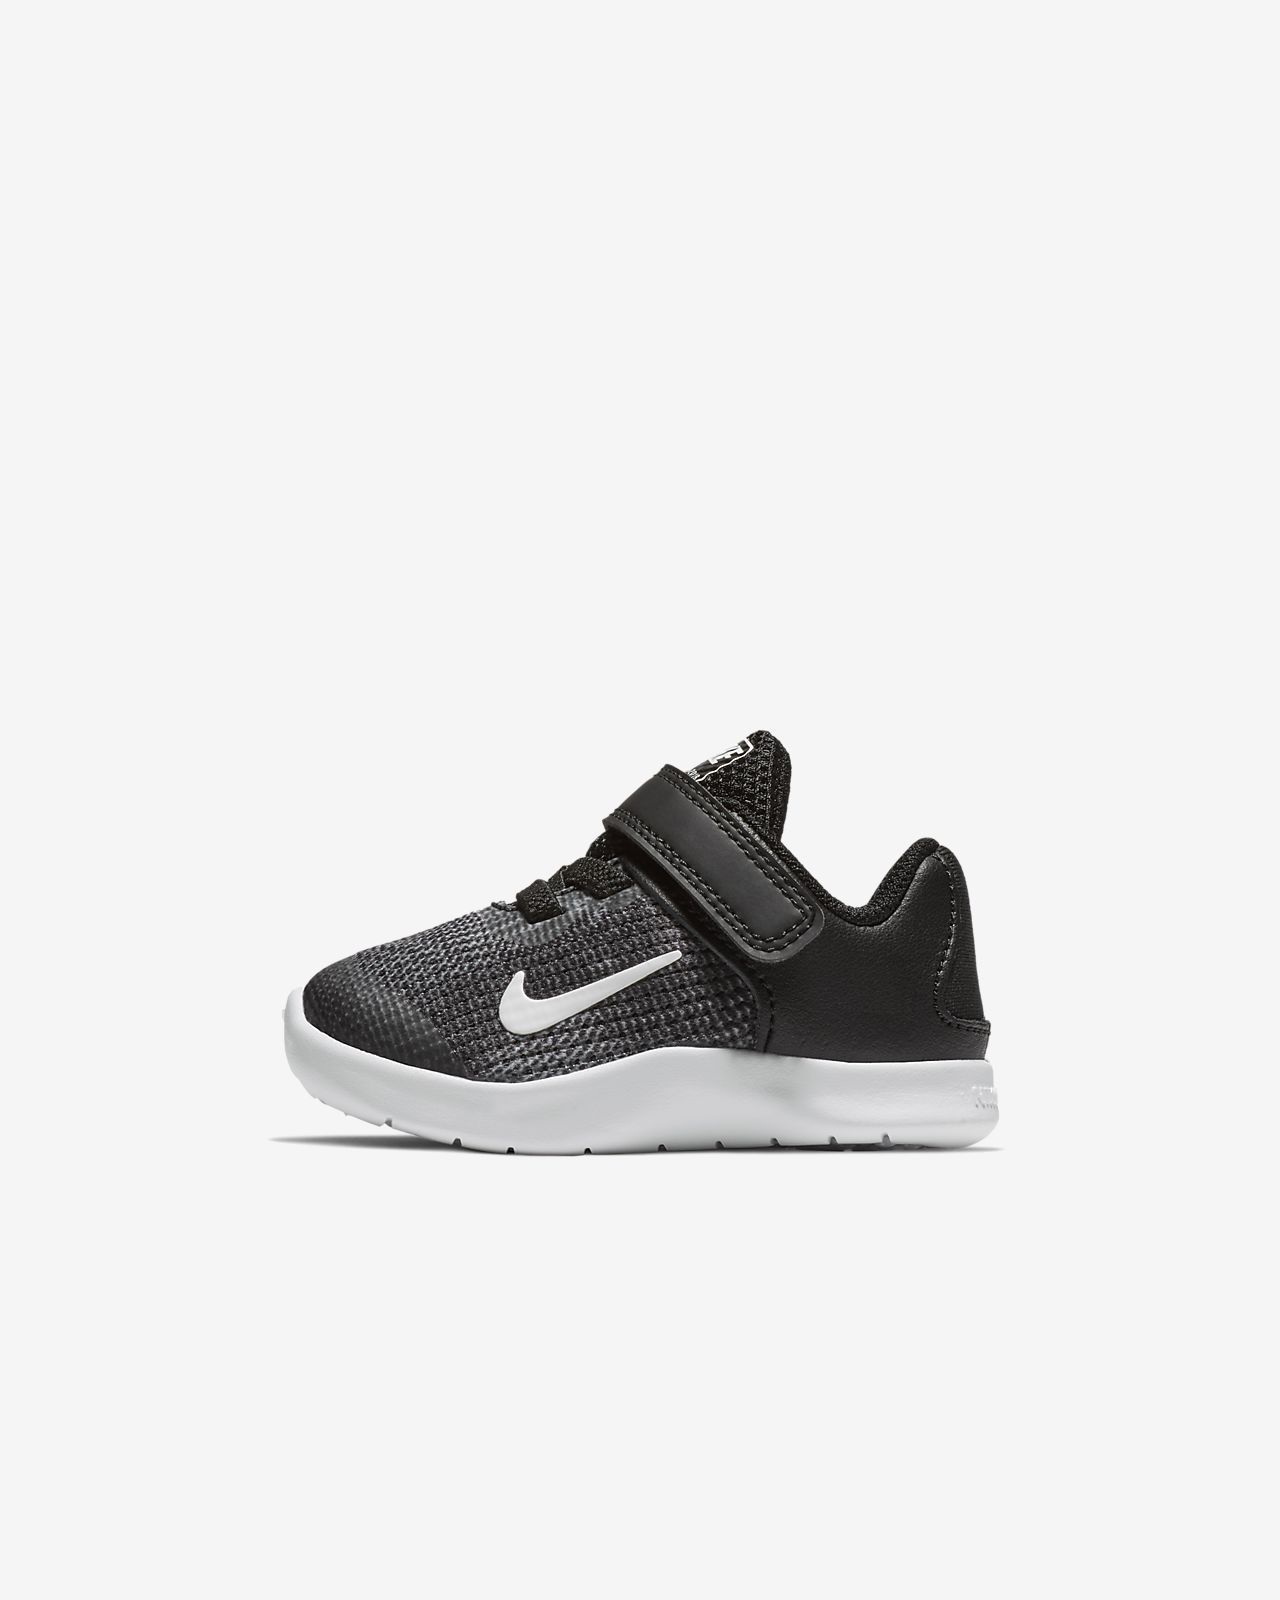 NIKE Official]Nike Flex Runner Baby/Toddler Shoe.Online store (mail order  site)